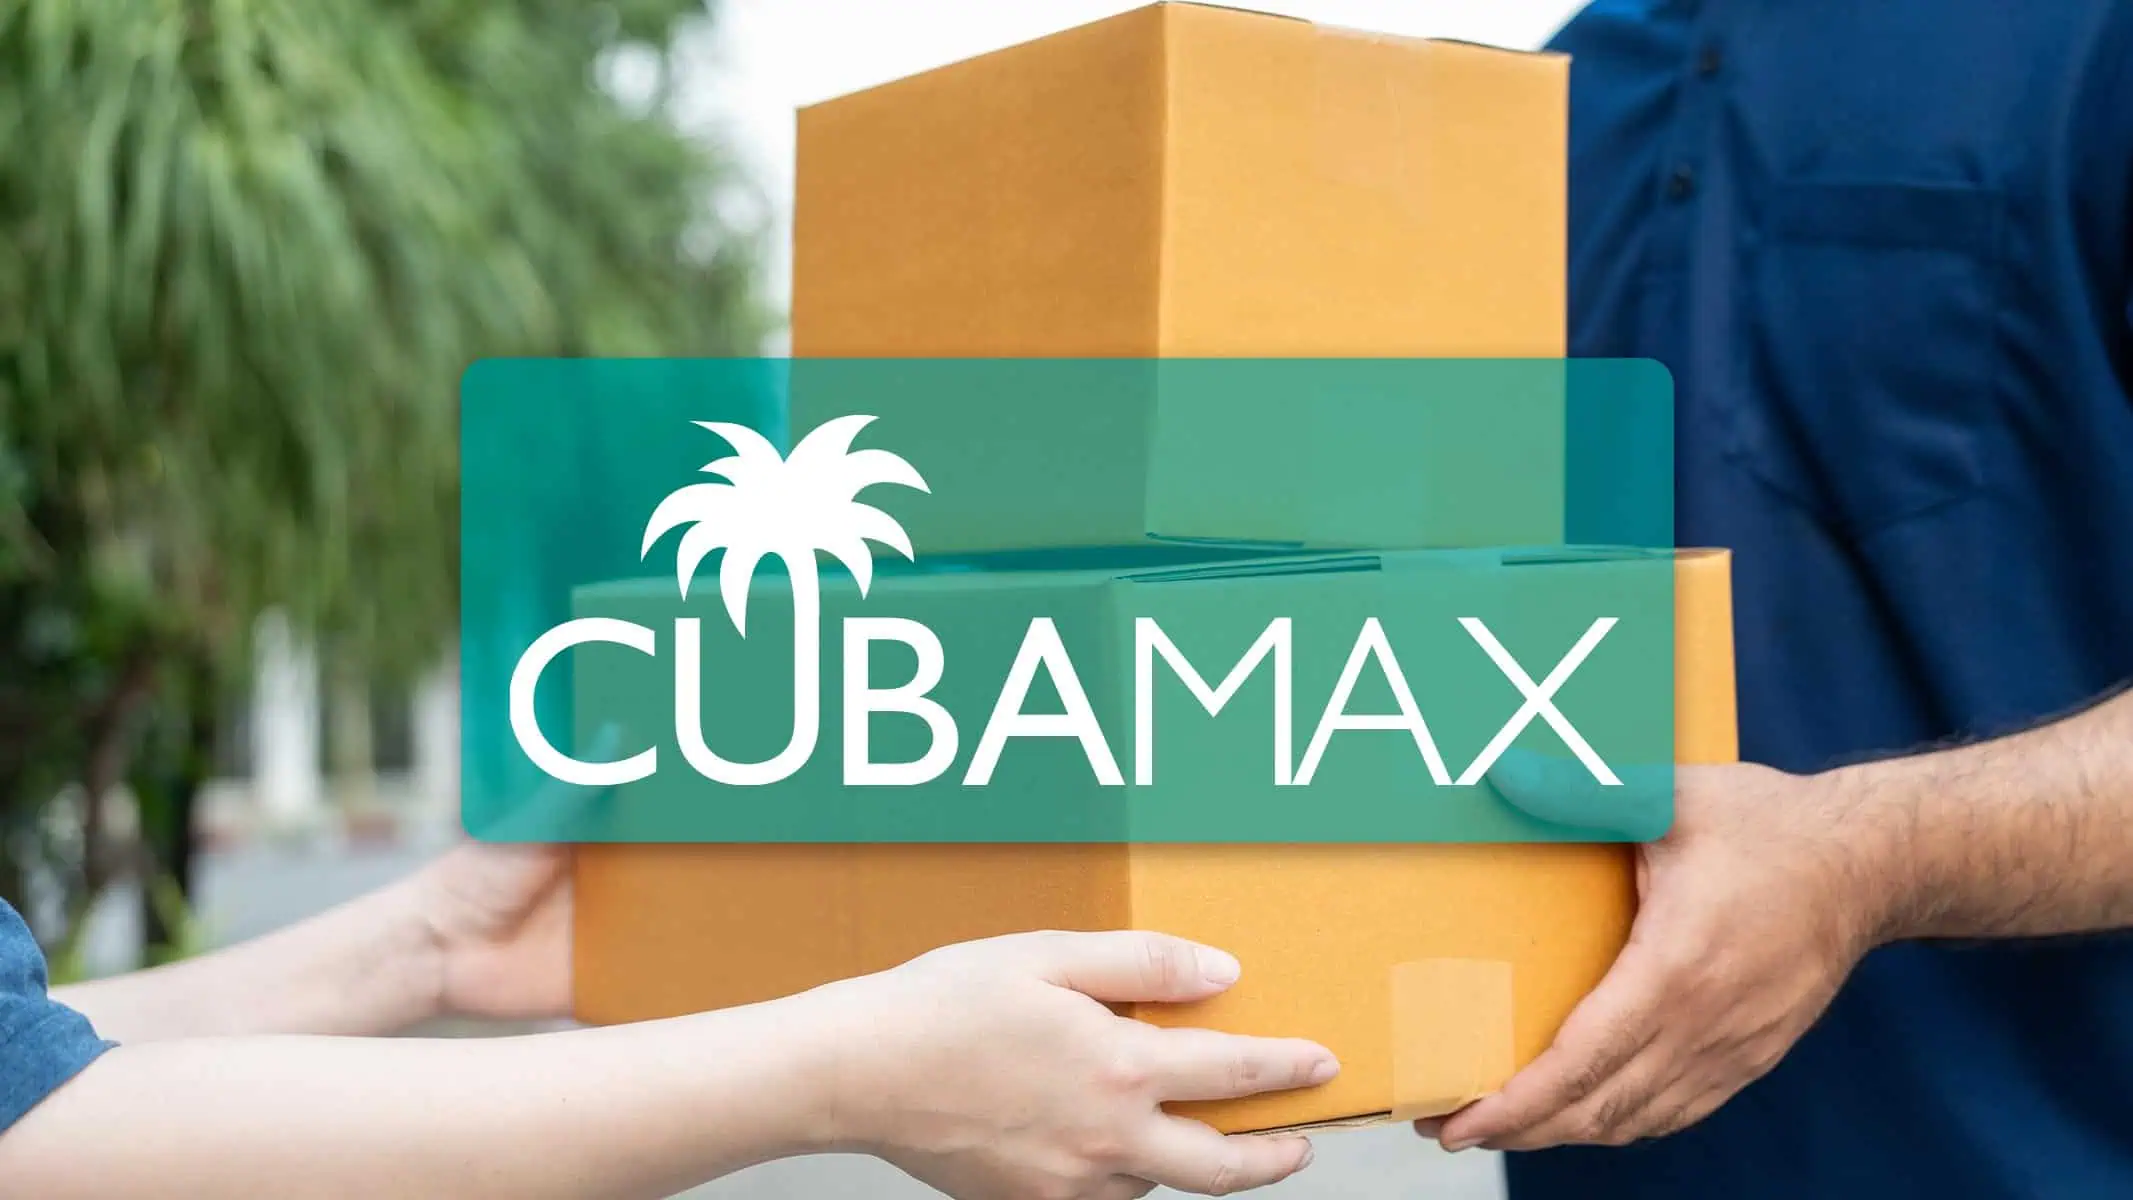 Nueva Oferta de Cubamax: ¡Regalan Paquetes de Café a Tus Familiares en Cuba!